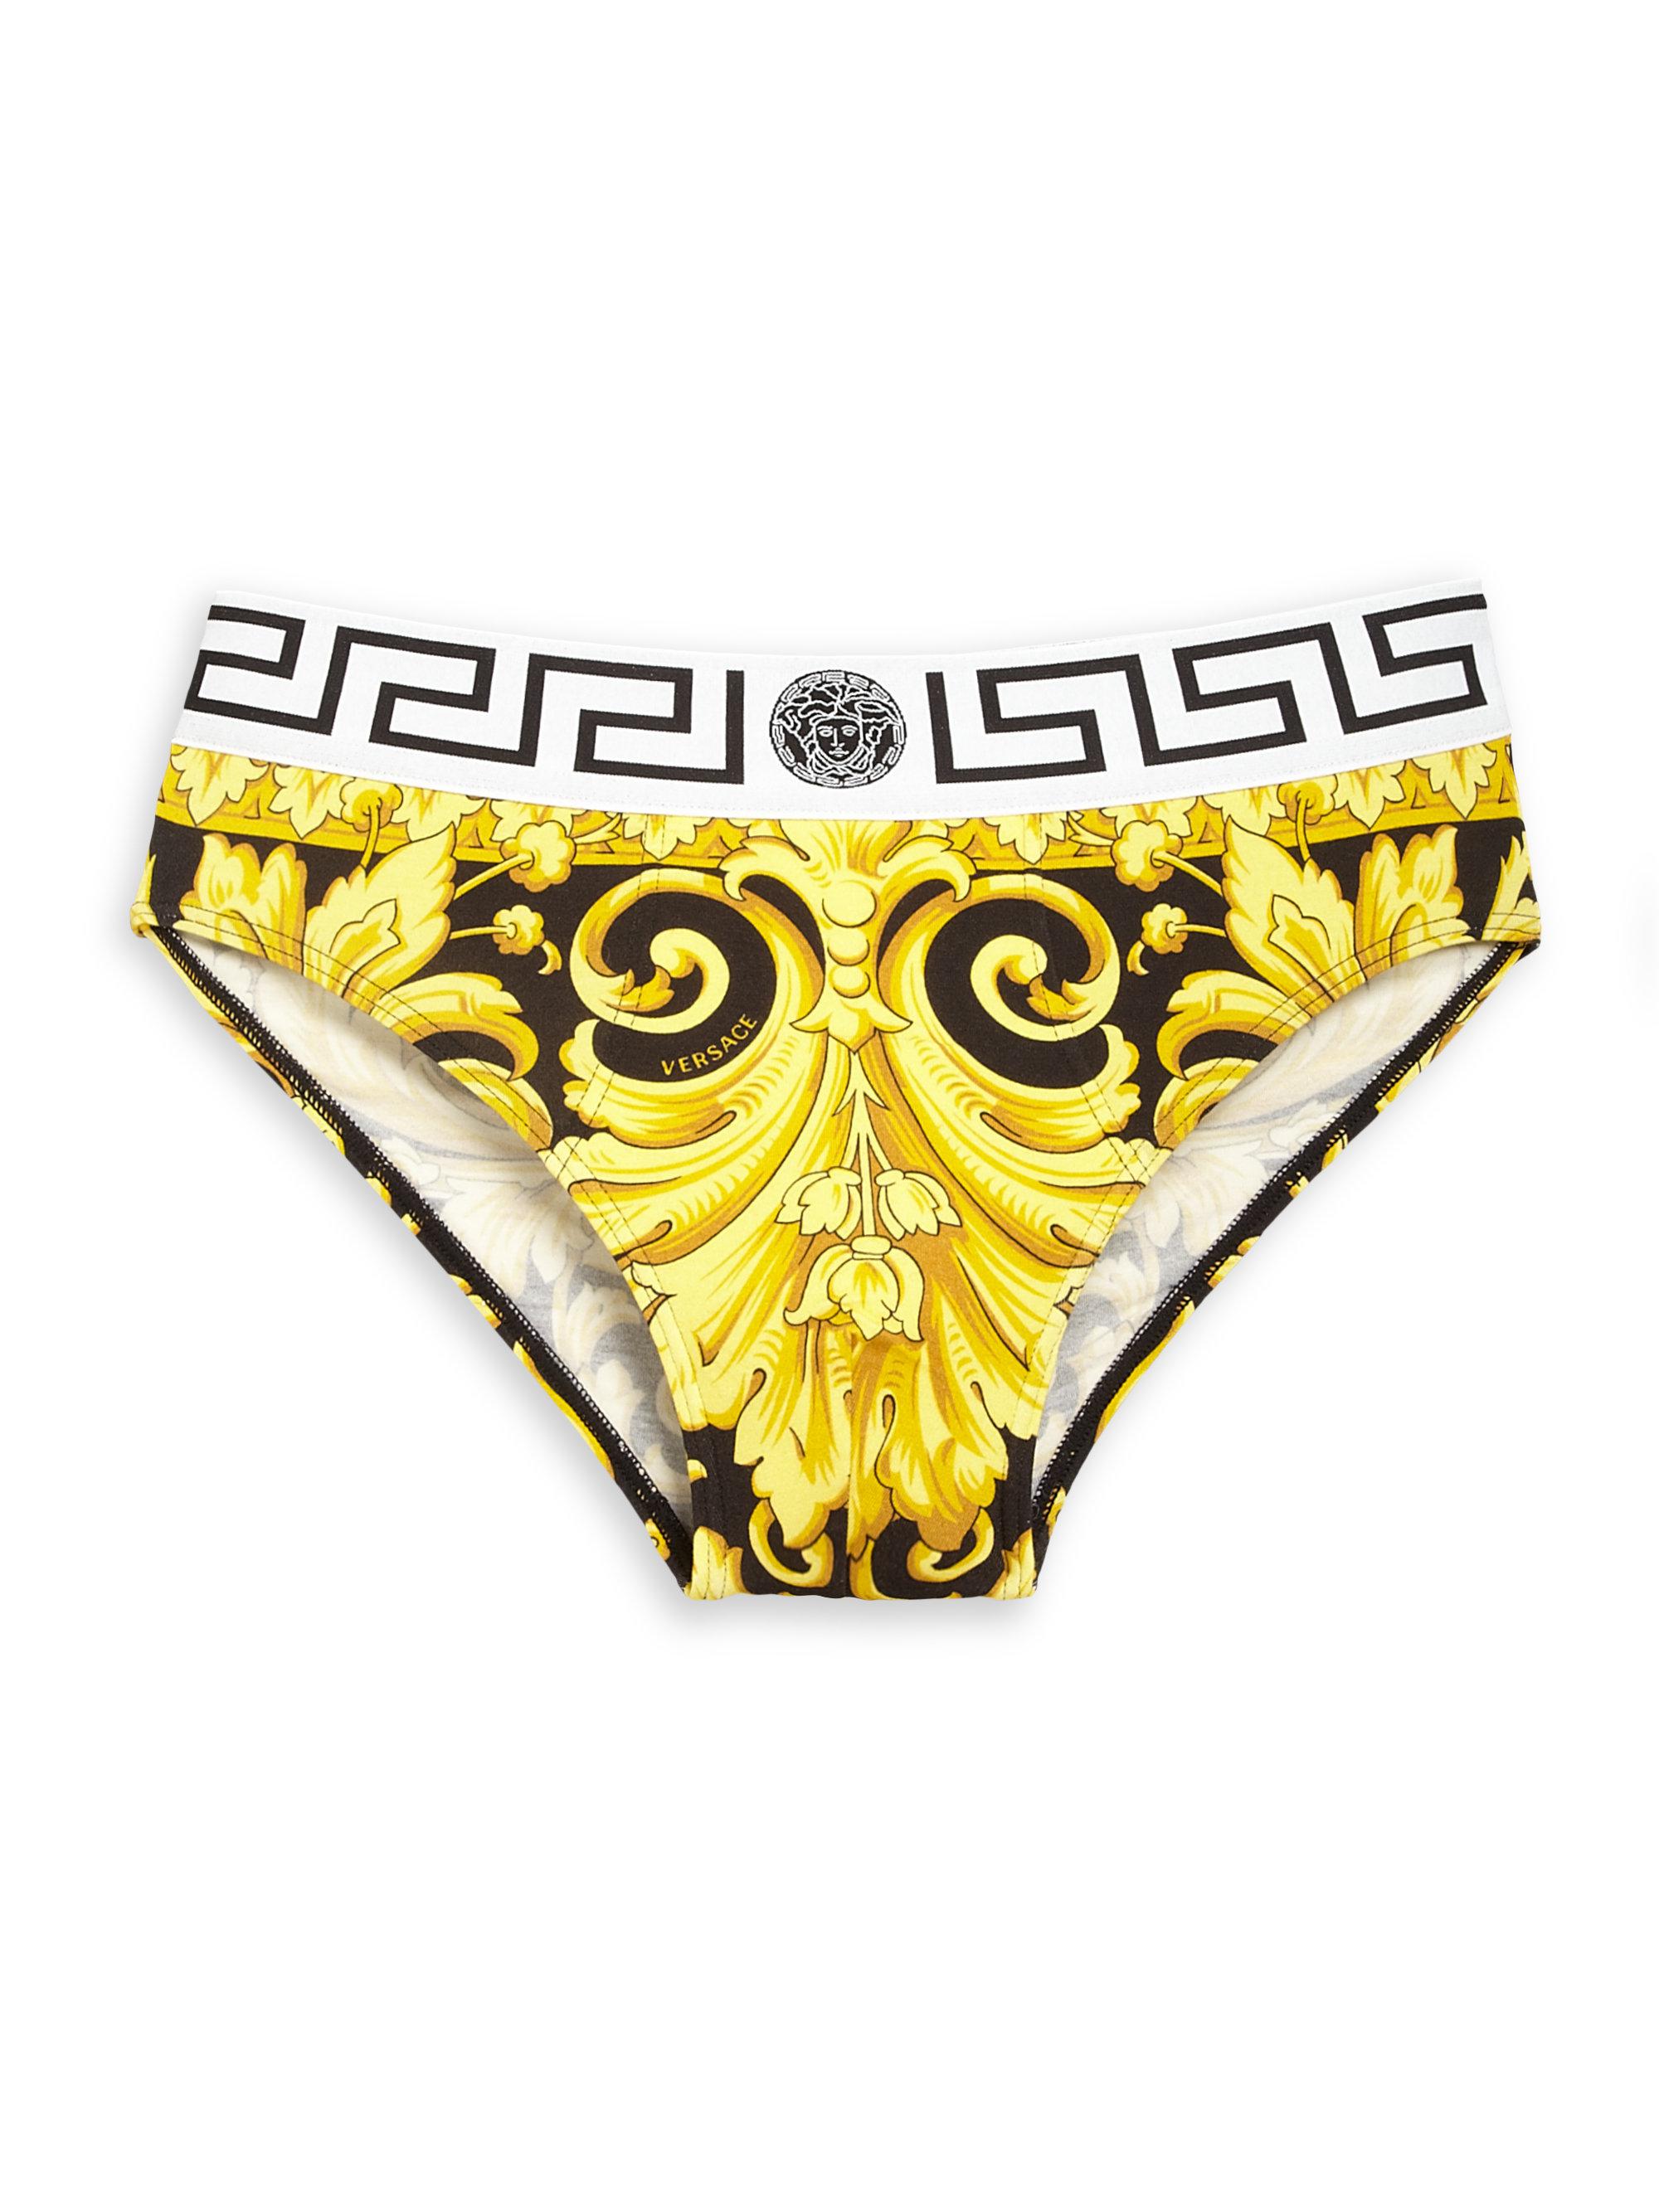 versace baroque underwear